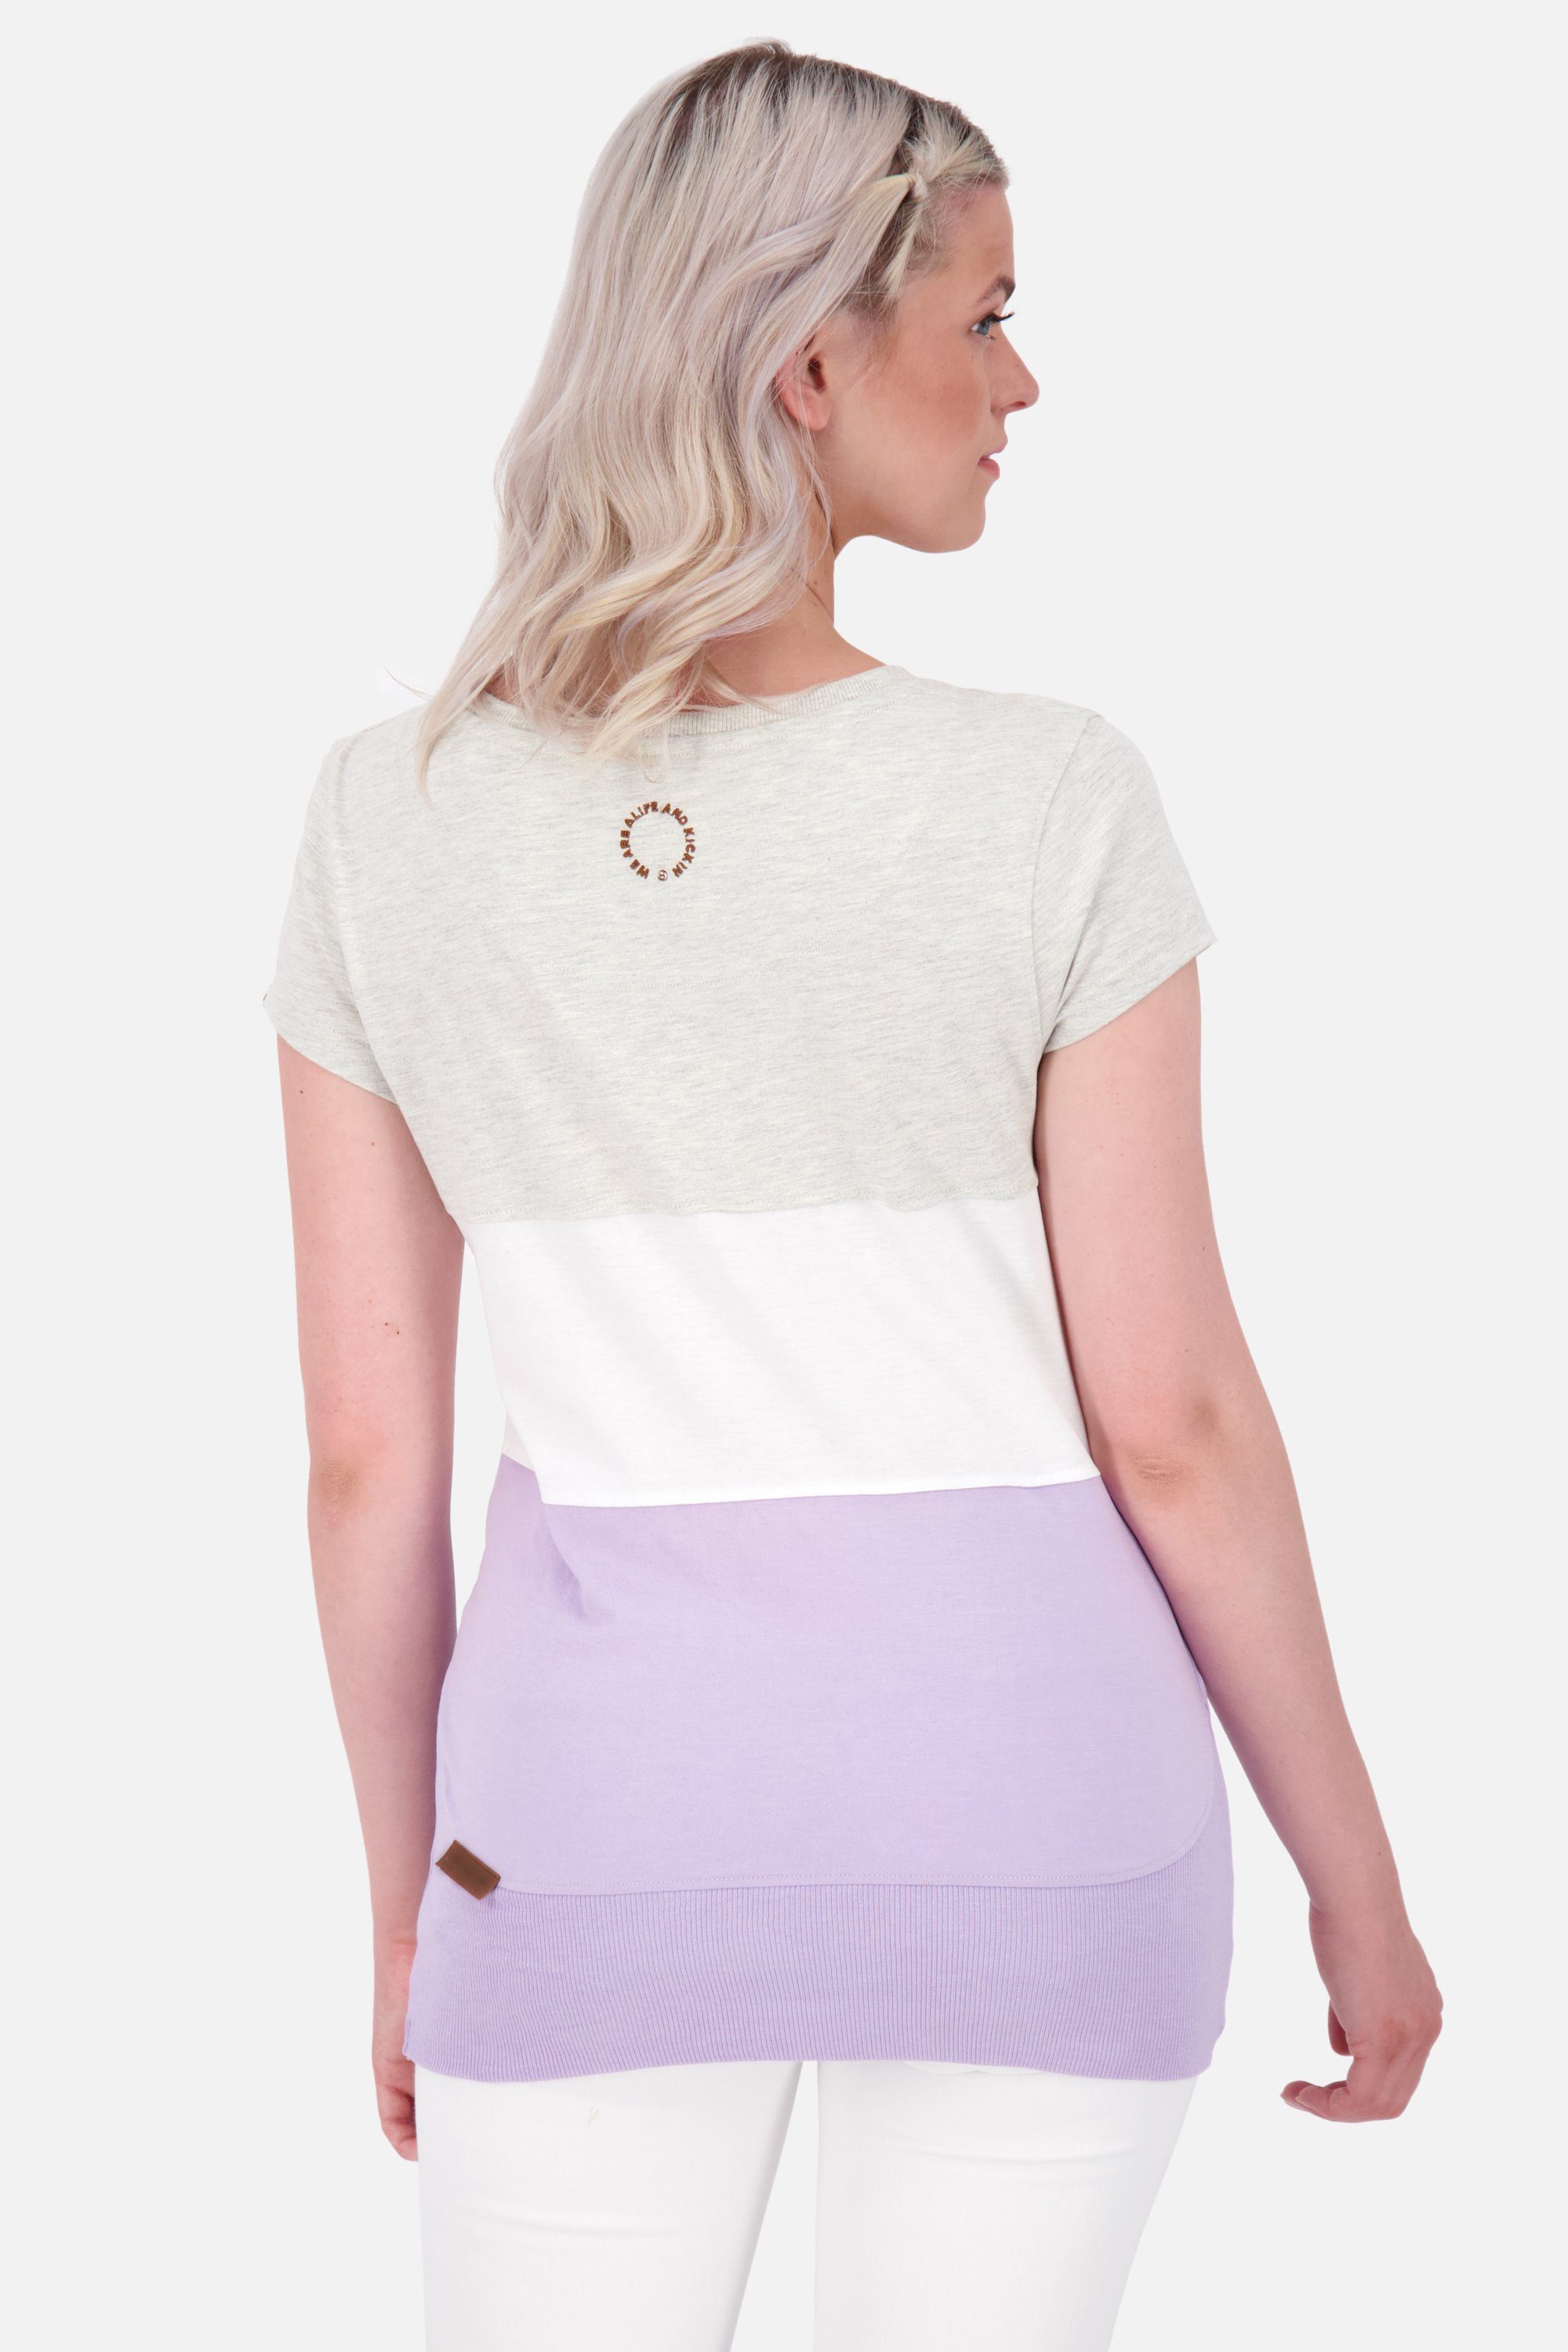 Alife & Shirt Kurzarmshirt, digital Rundhalsshirt Damen lavender Shirt Kickin CoriAK melange A